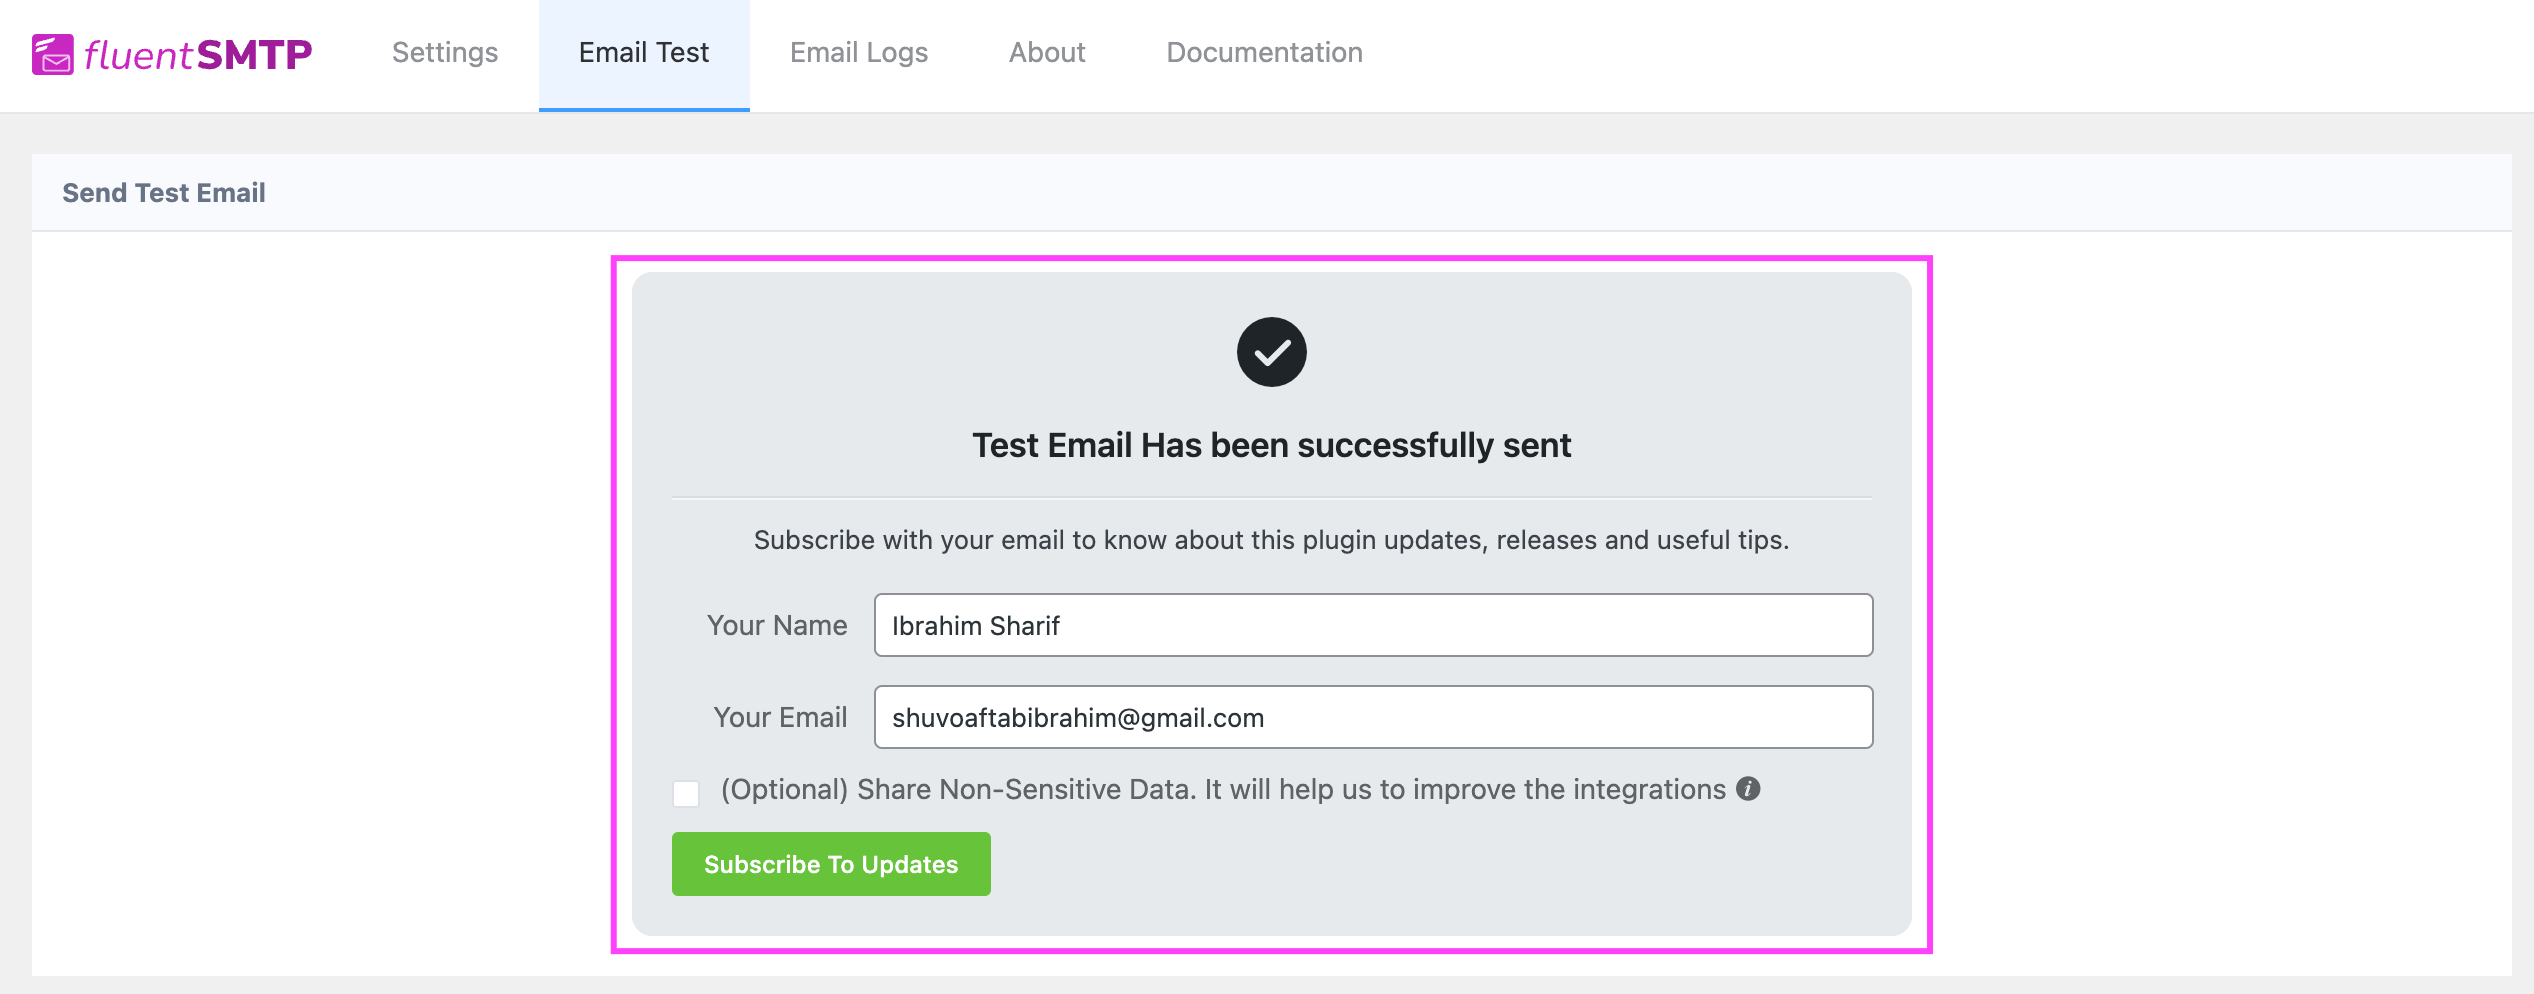 fluent smtp test email sent